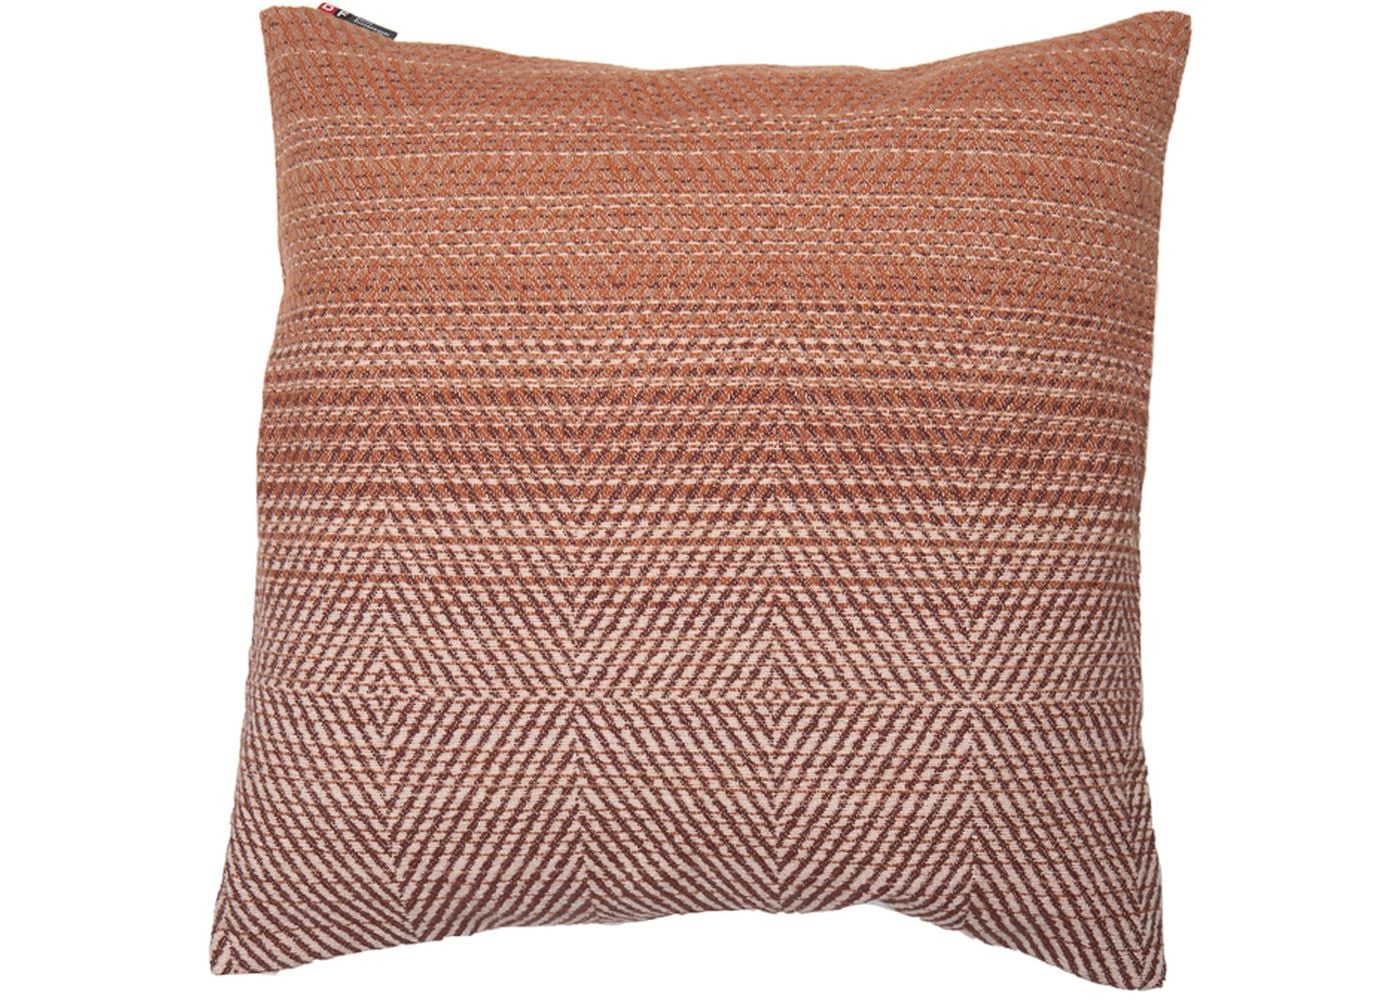 Gradient/herringbone cushion cover by David Fusseneger